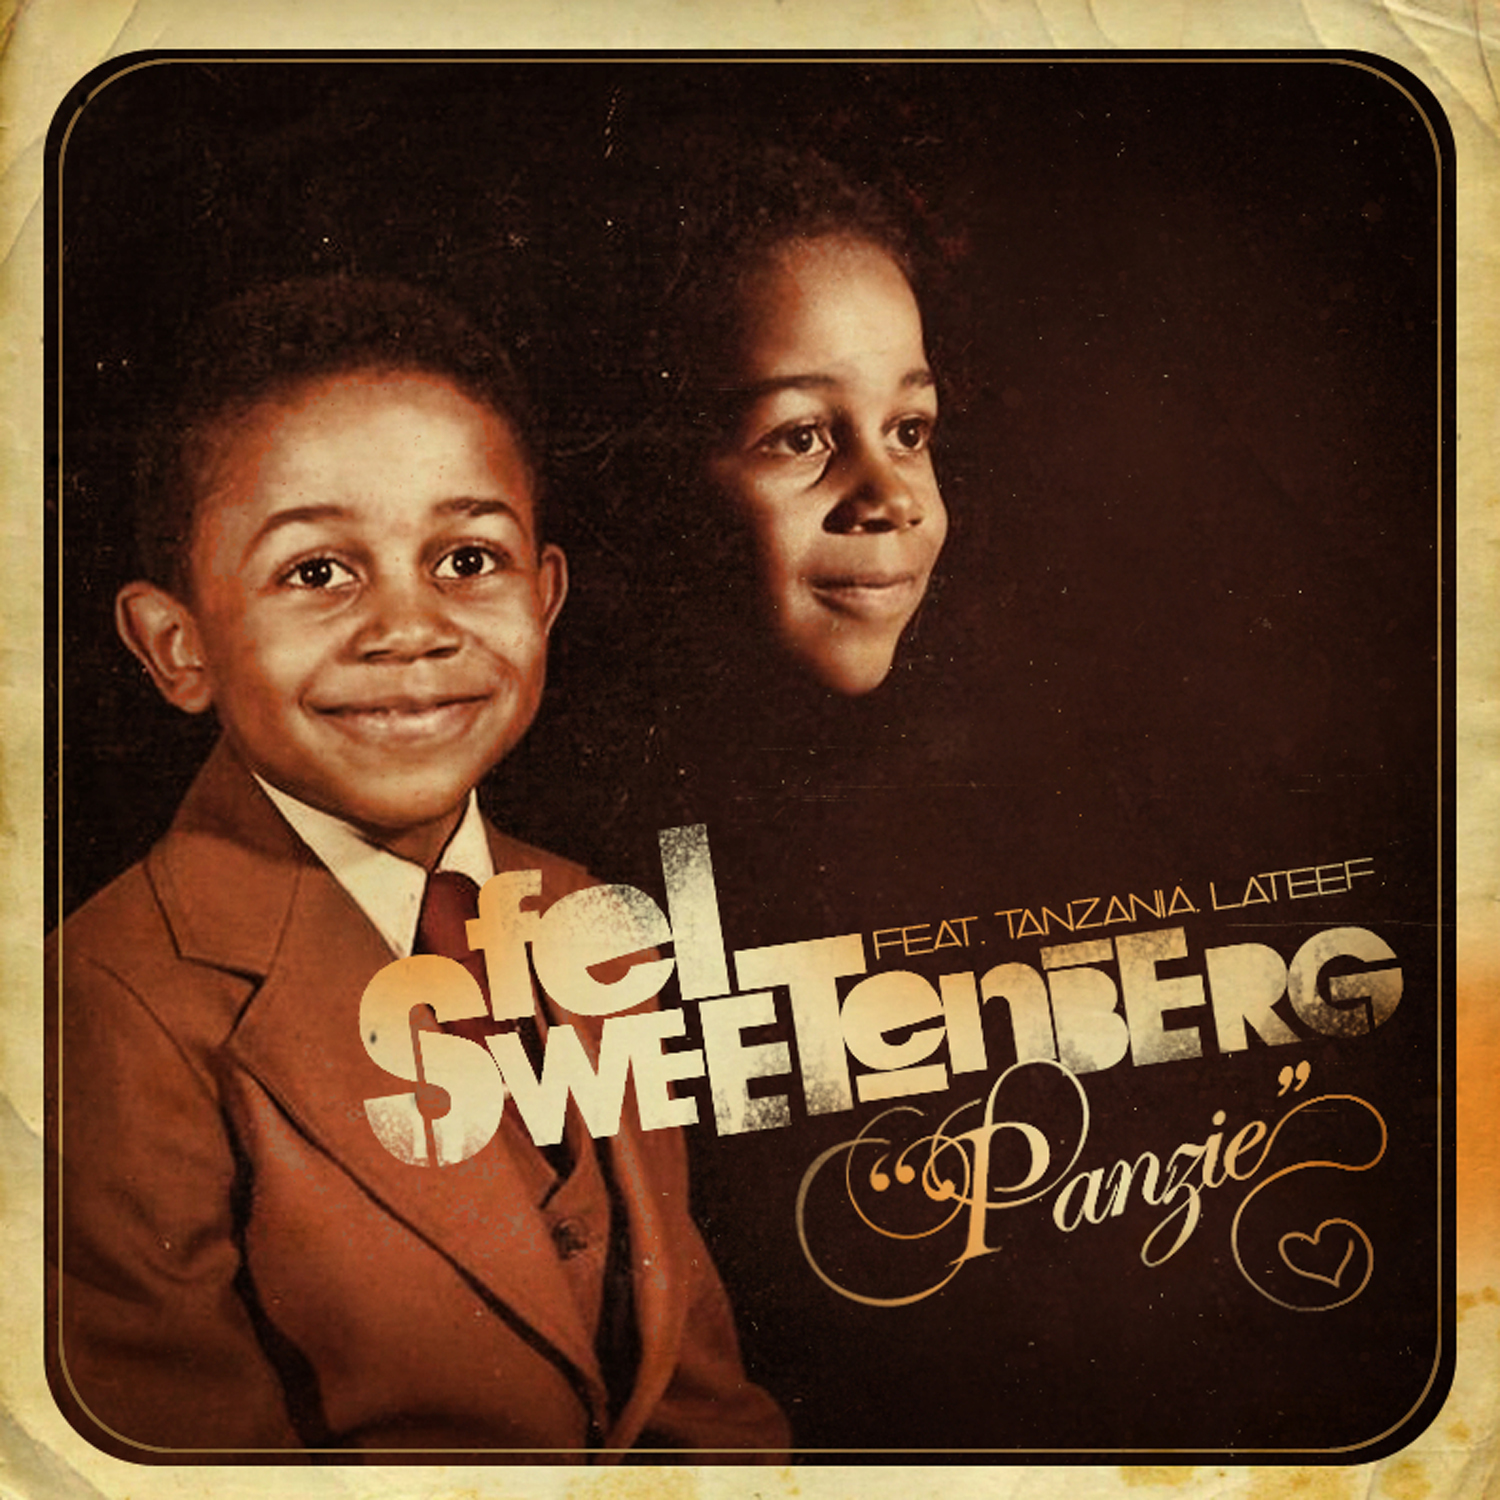 Fel Sweetenberg - "Panzie" (feat. Tanzania Lateef) (MP3)